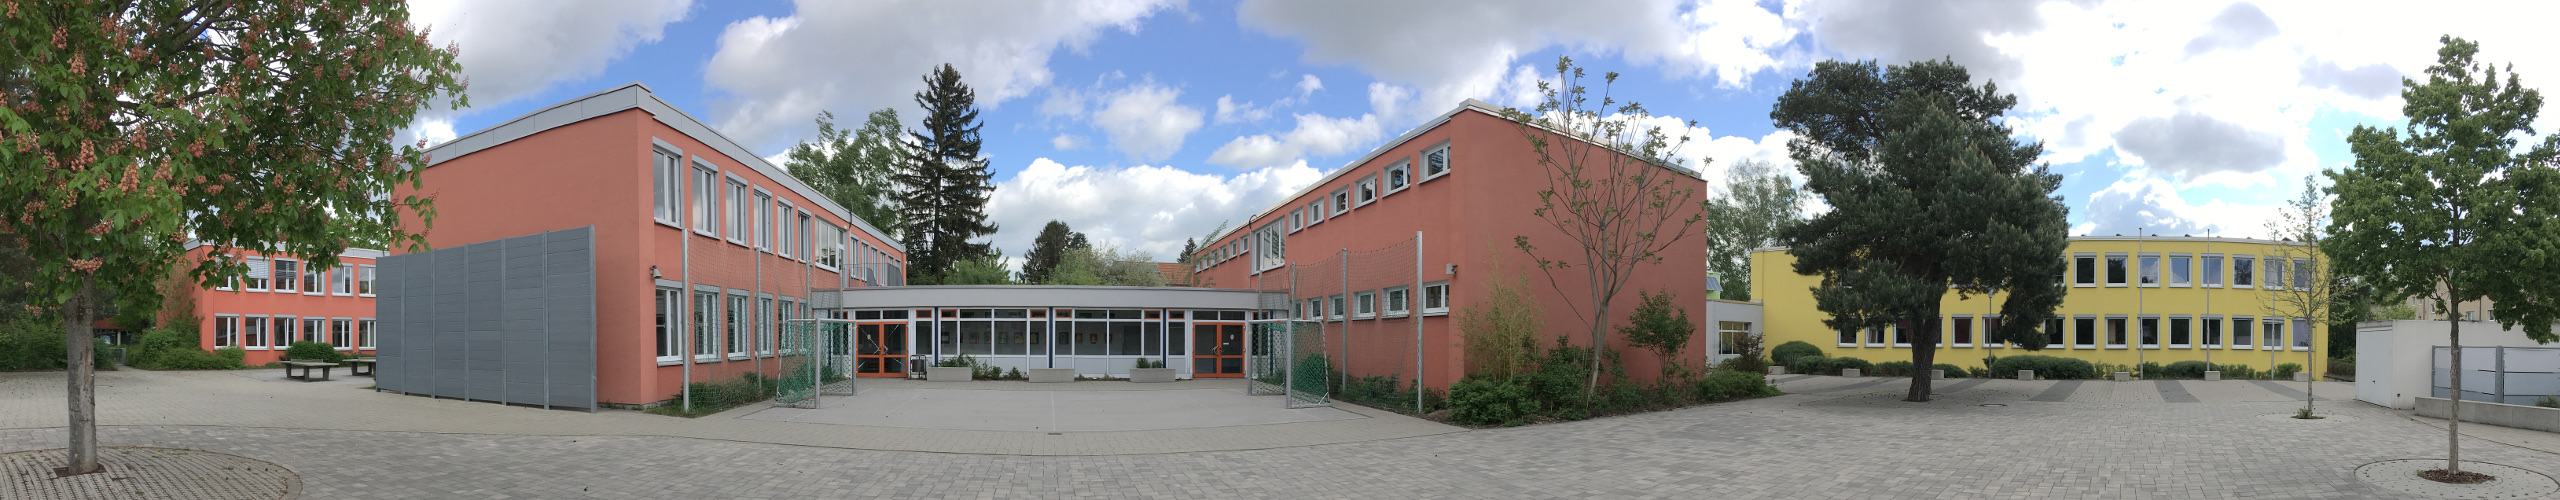 Otfried-Preußler-Schule Erlangen